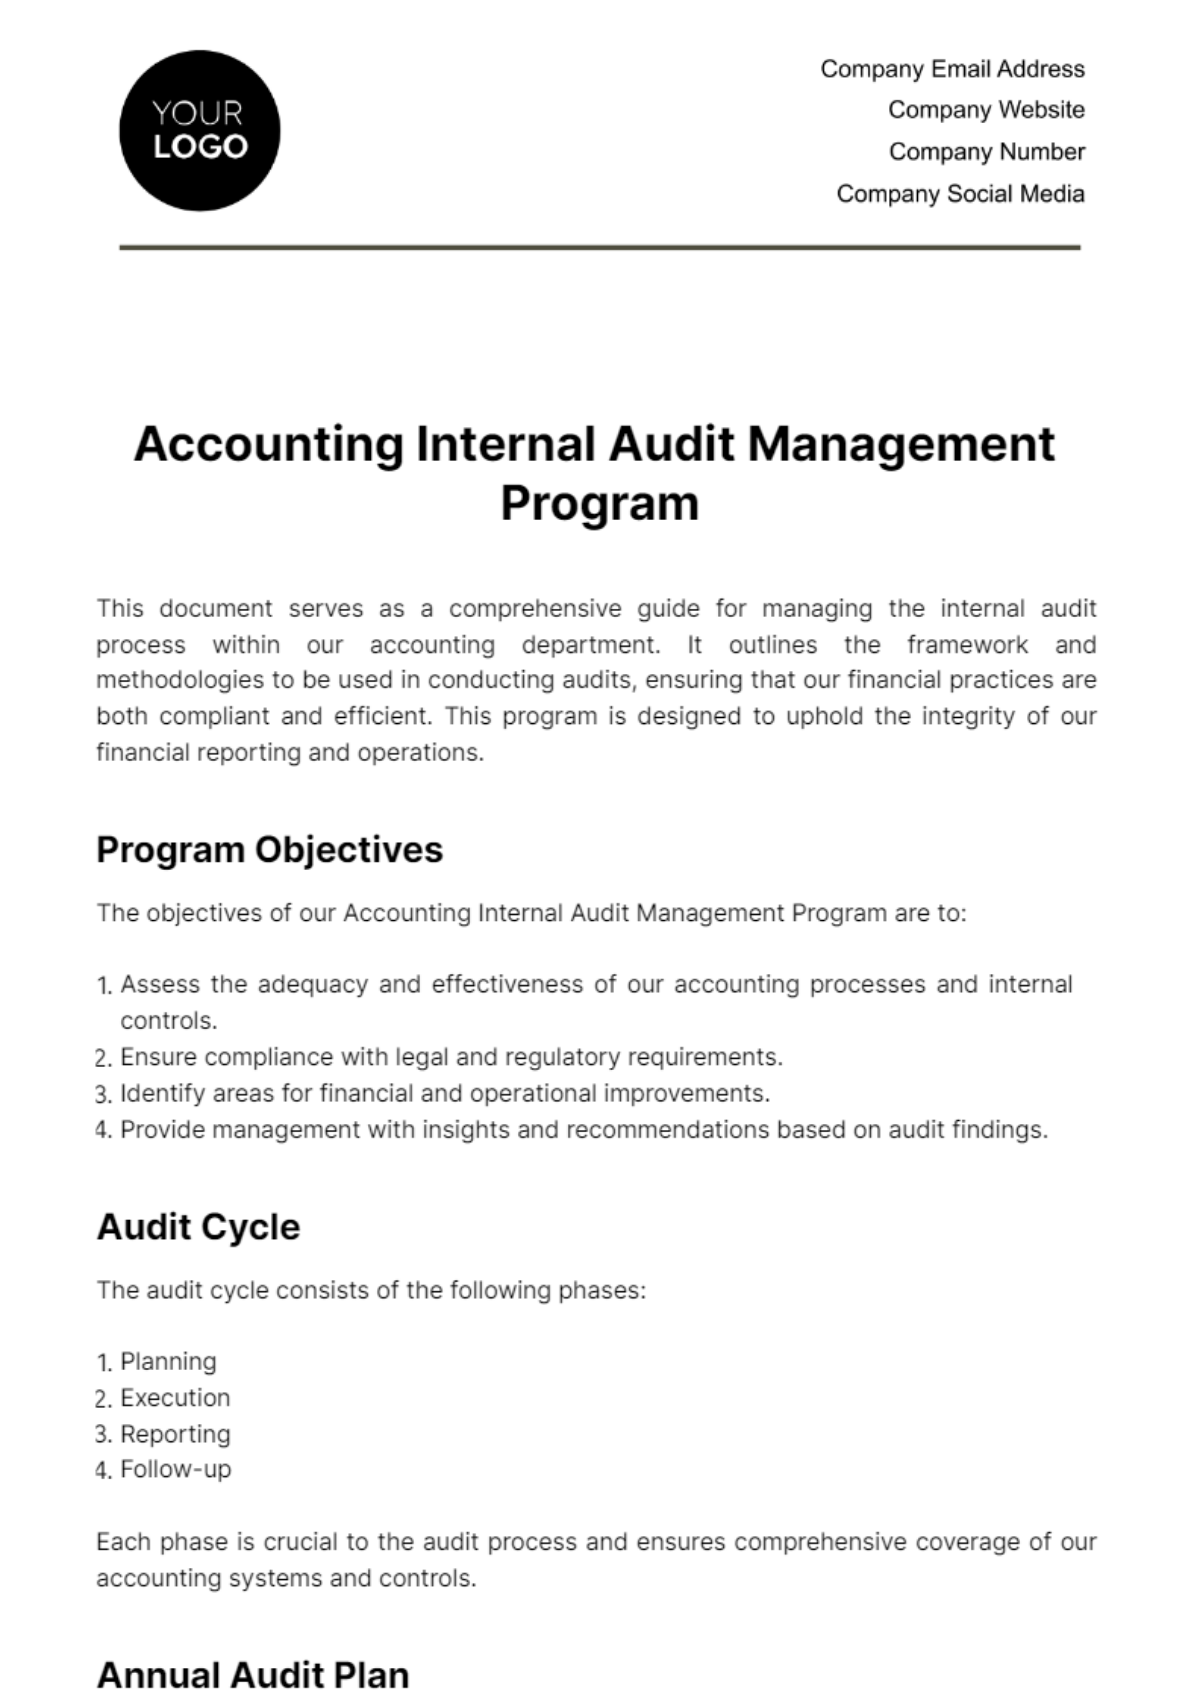 Accounting Internal Audit Management Program Template